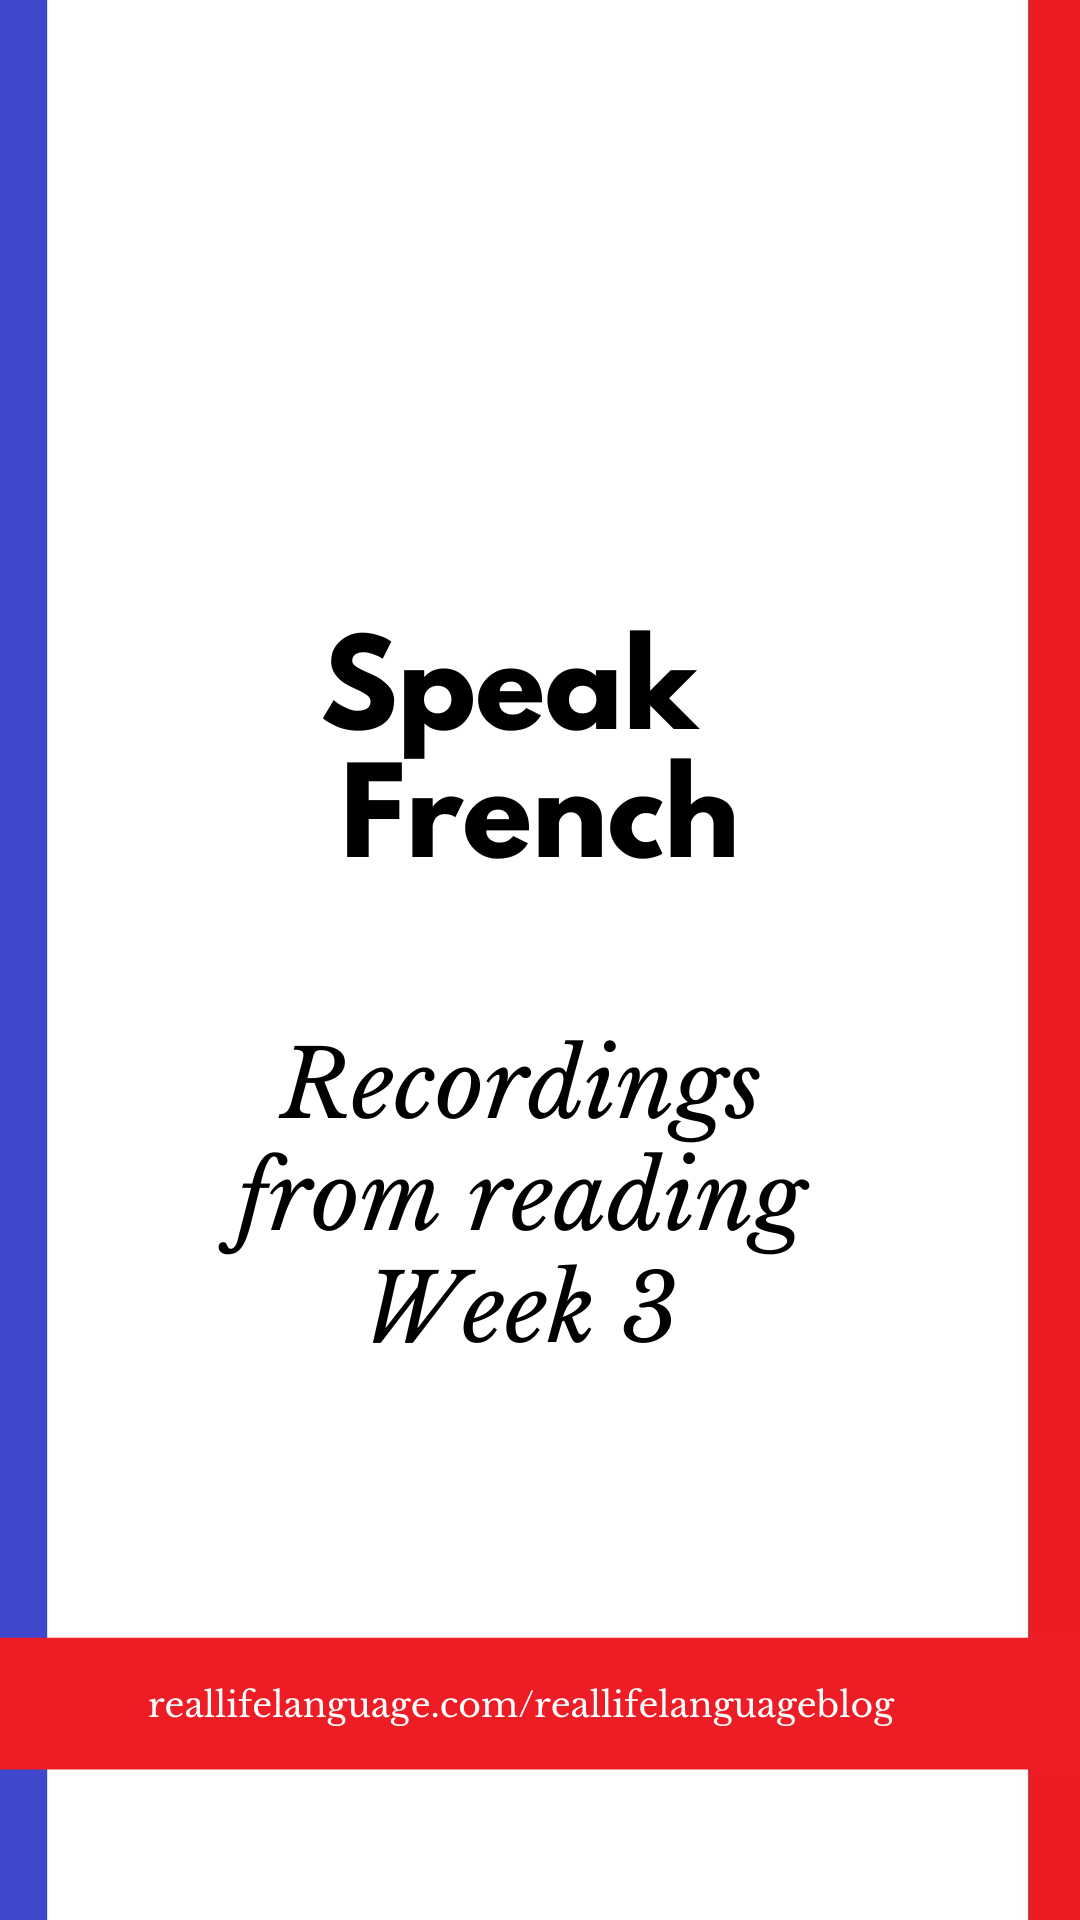 speak french: a little tip